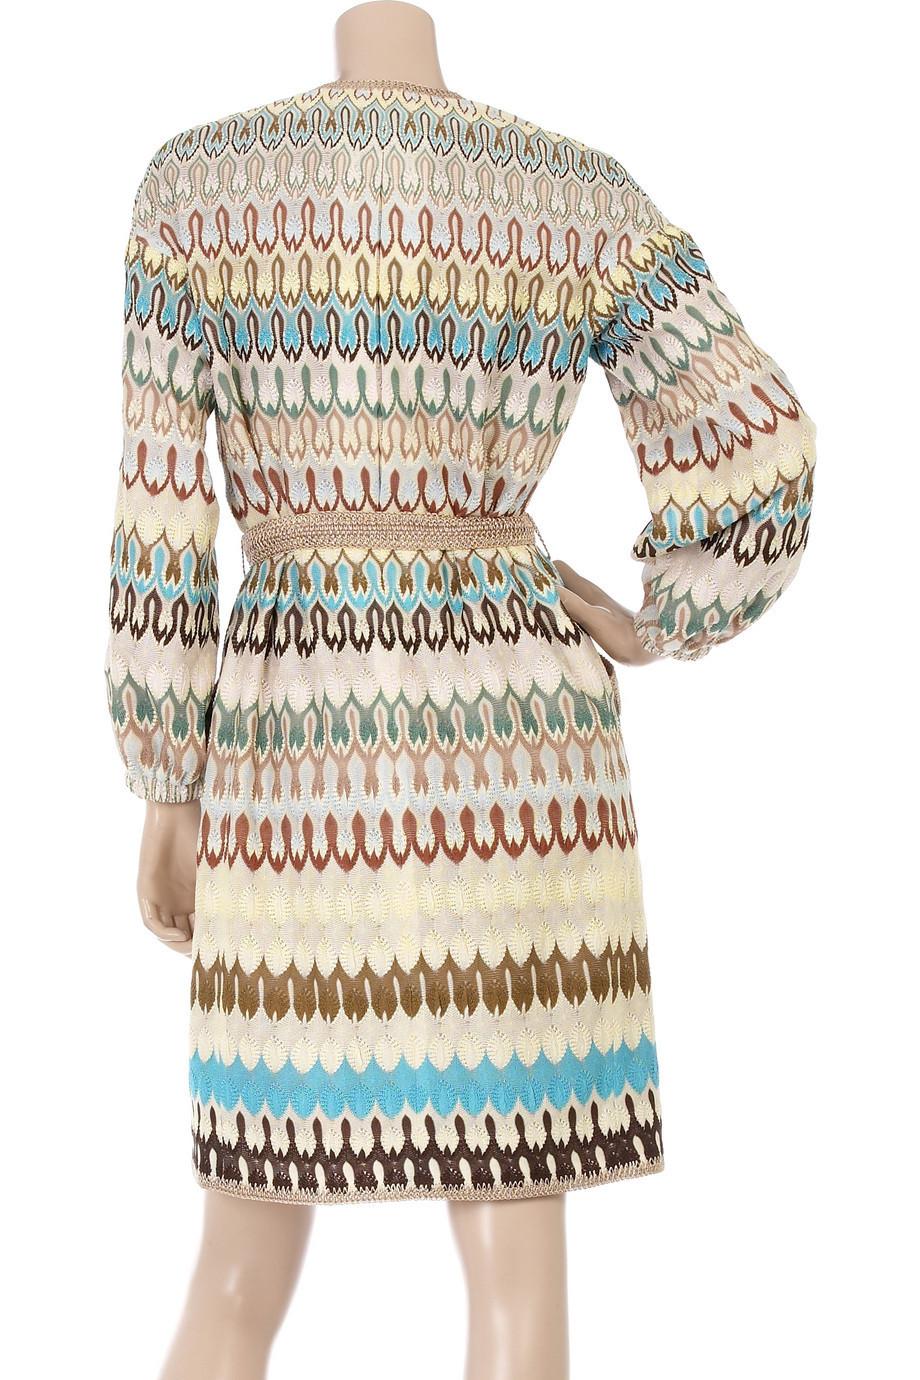 UNWORN Missoni Multicolor Crochet Knit Jacket Blazer Cardigan Coat with Belt 38 In Good Condition For Sale In Switzerland, CH